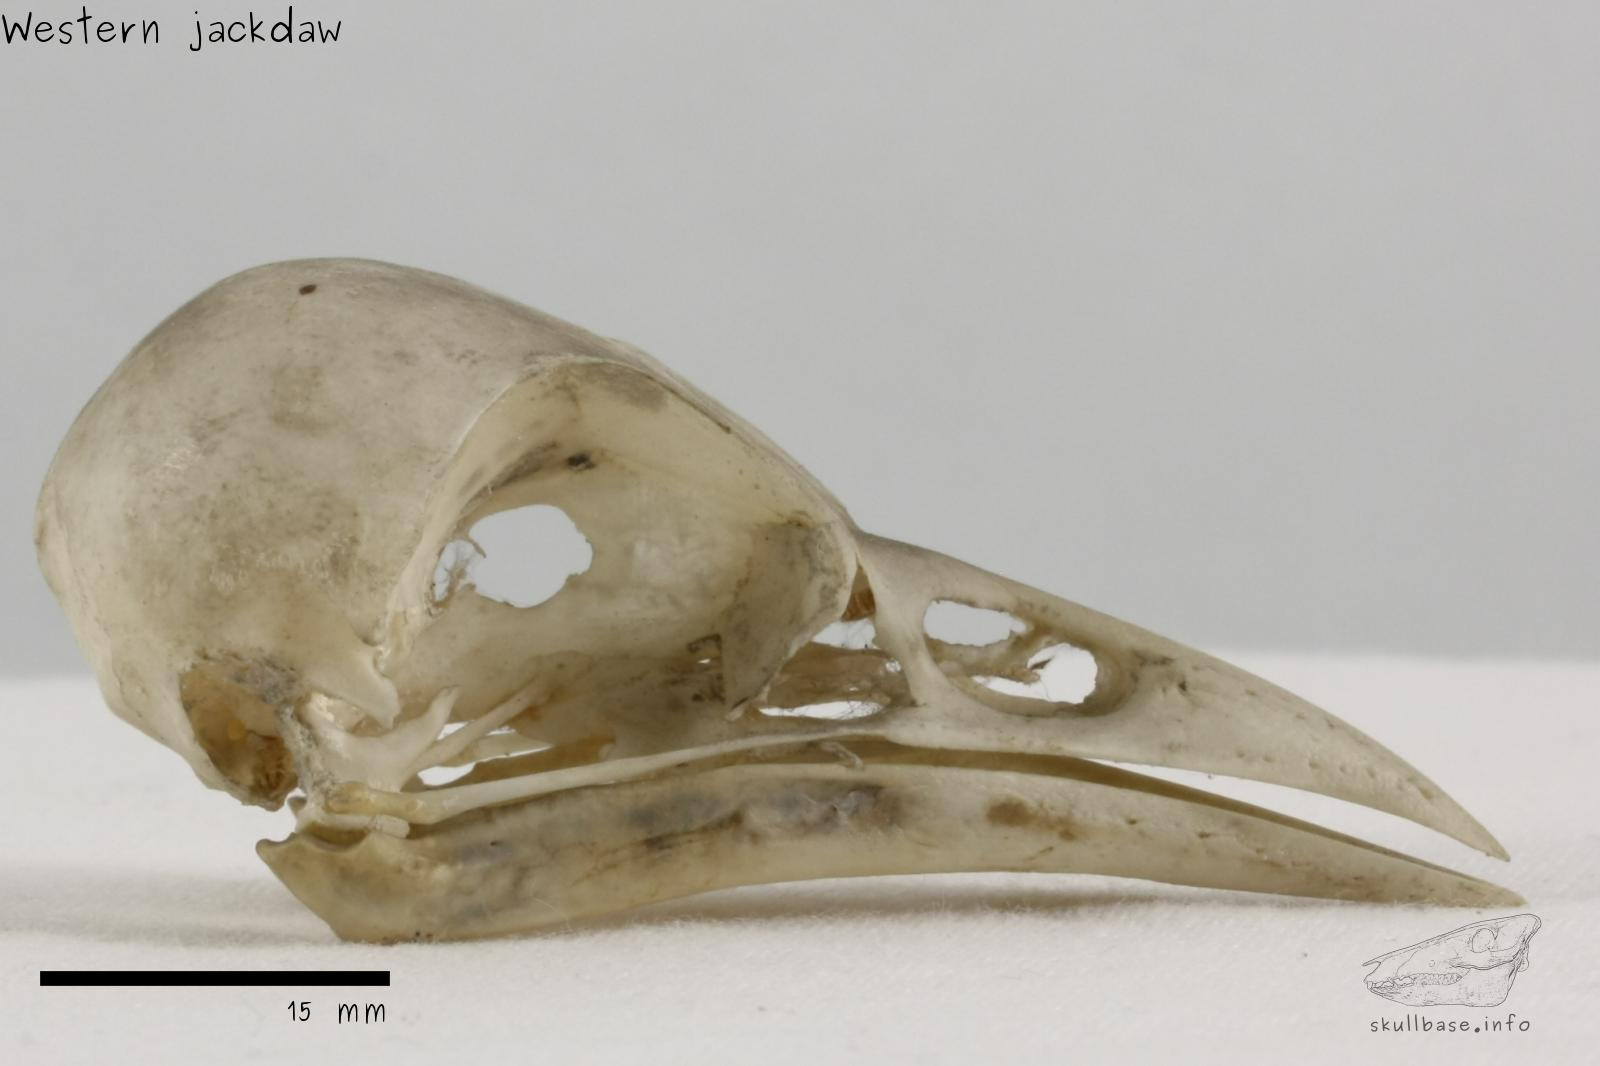 Western jackdaw (Corvus monedula) skull lateral view